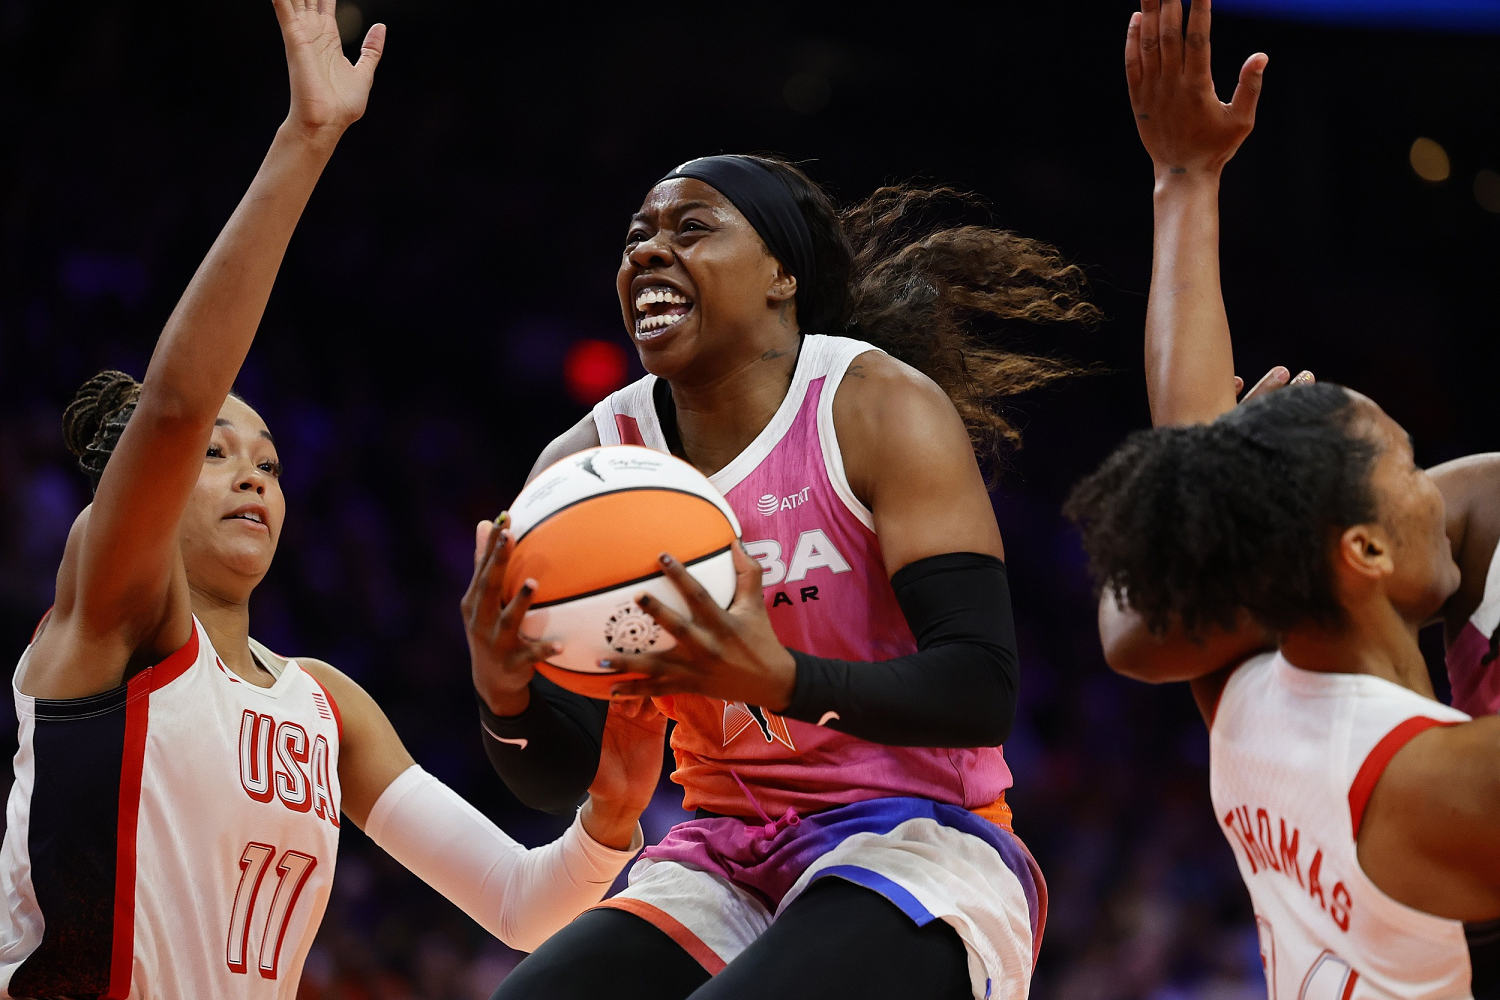 Team USA falls to WNBA All-Star team less than a week before Olympics